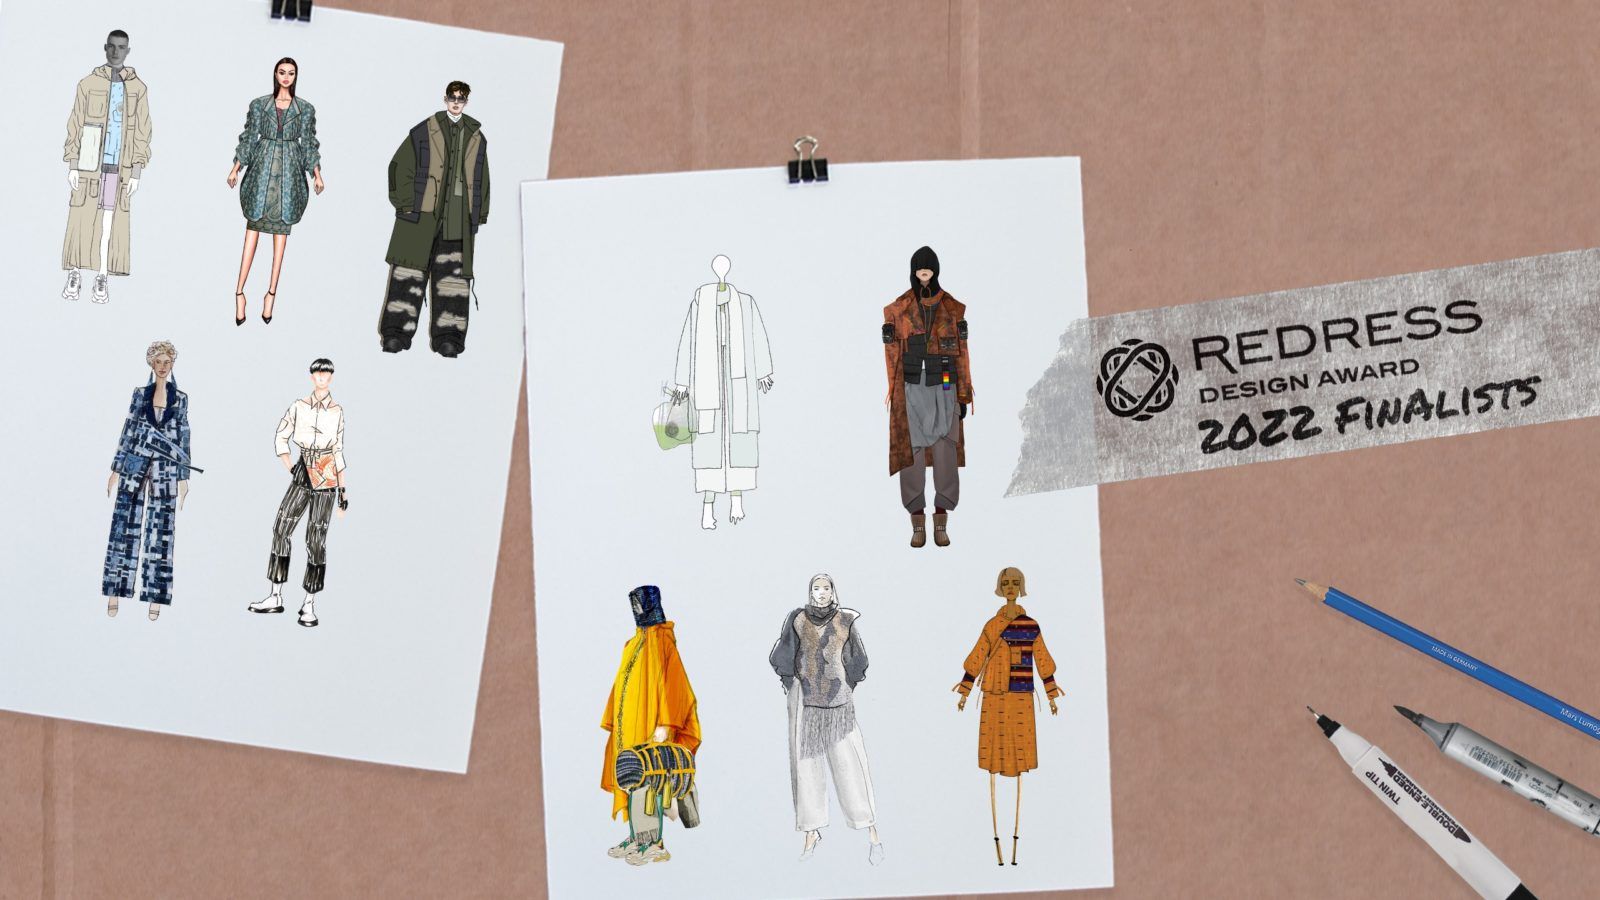 Hong Kong’s Patrick Lam is a finalist for the Redress Design Award 2022